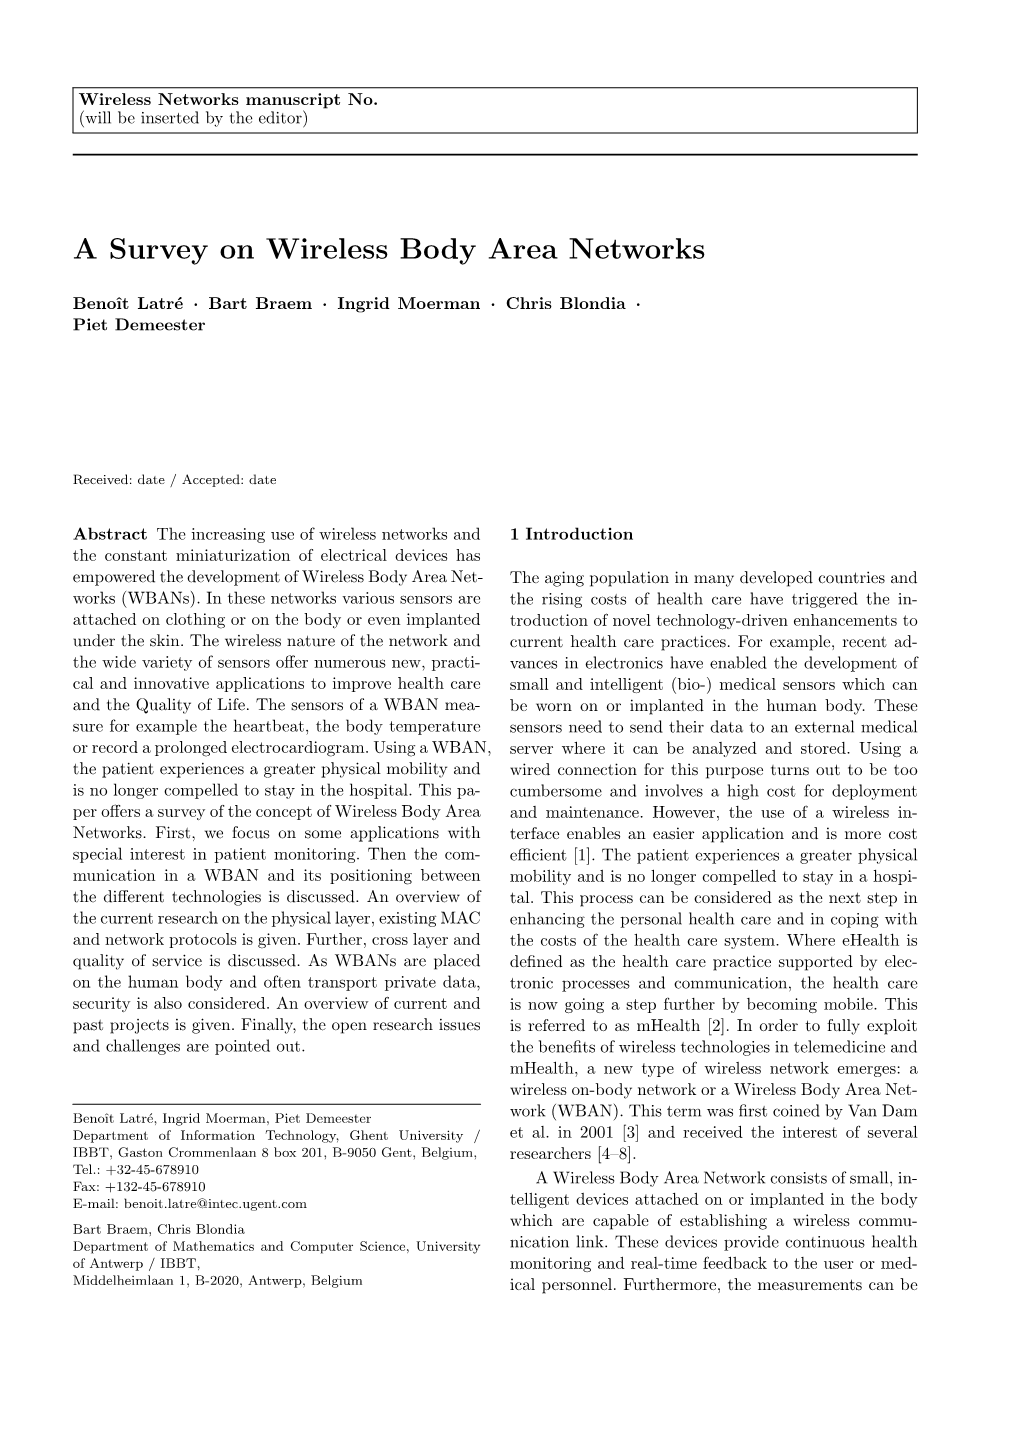 A Survey on Wireless Body Area Networks